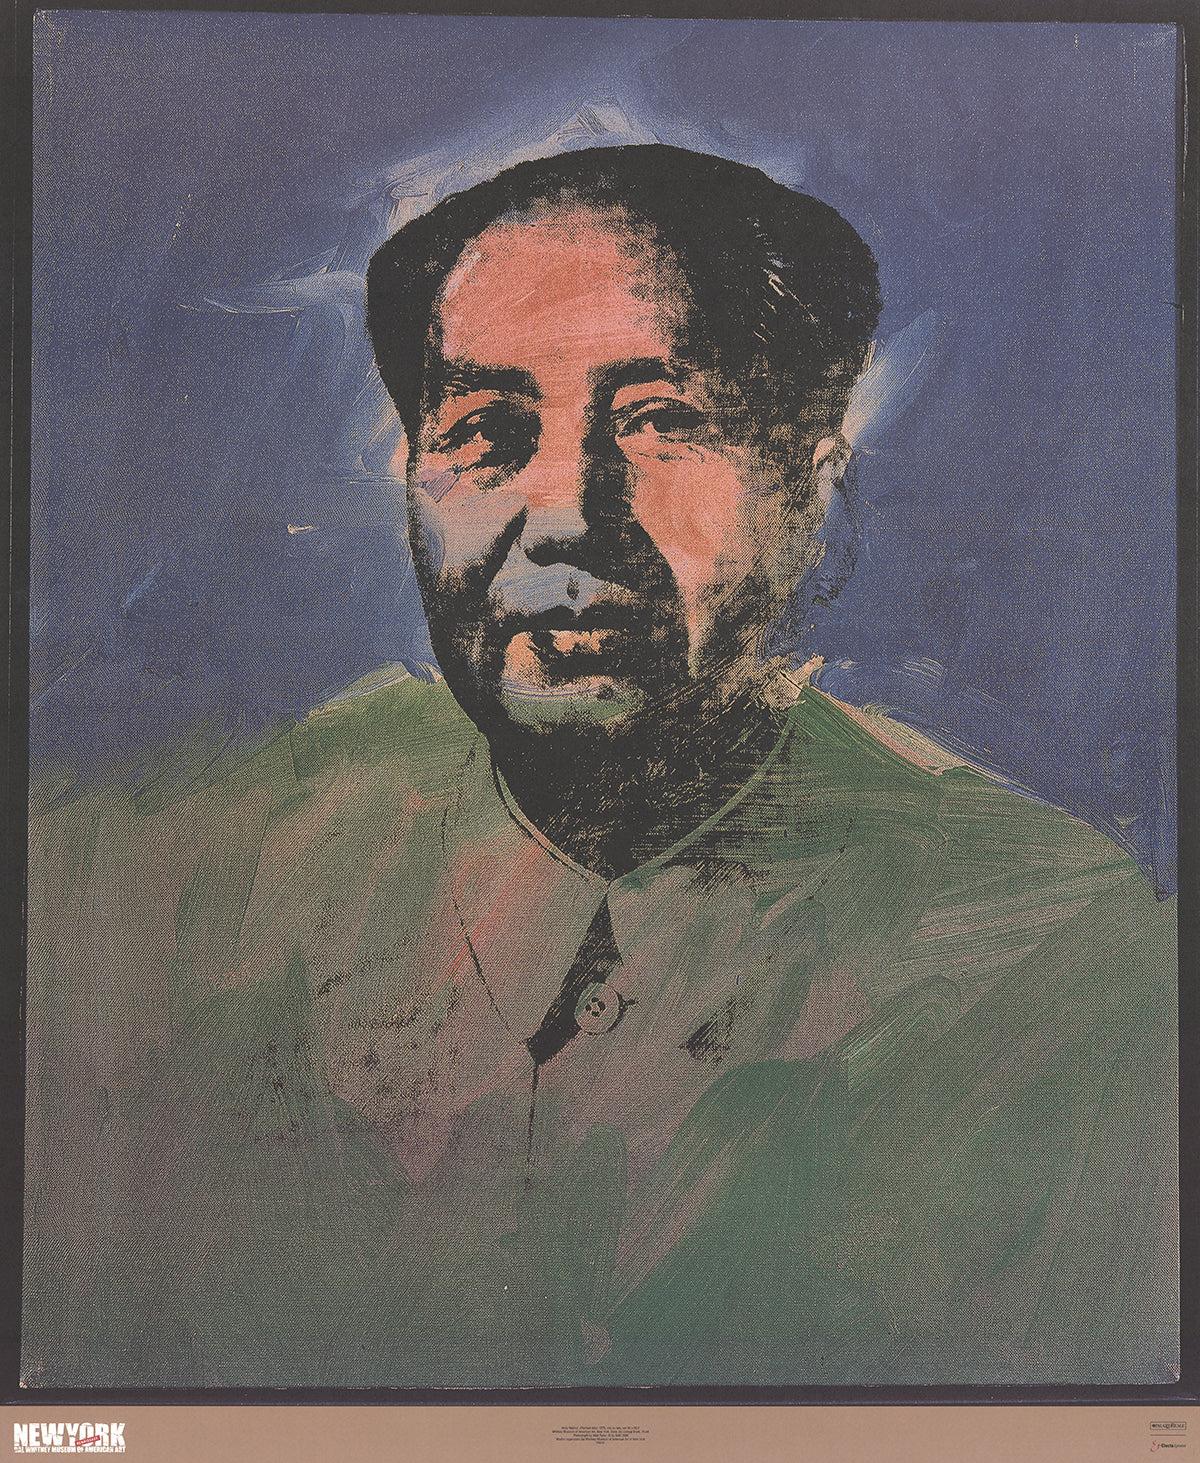 ANDY WARHOL Mao, 1989 - Print by Andy Warhol